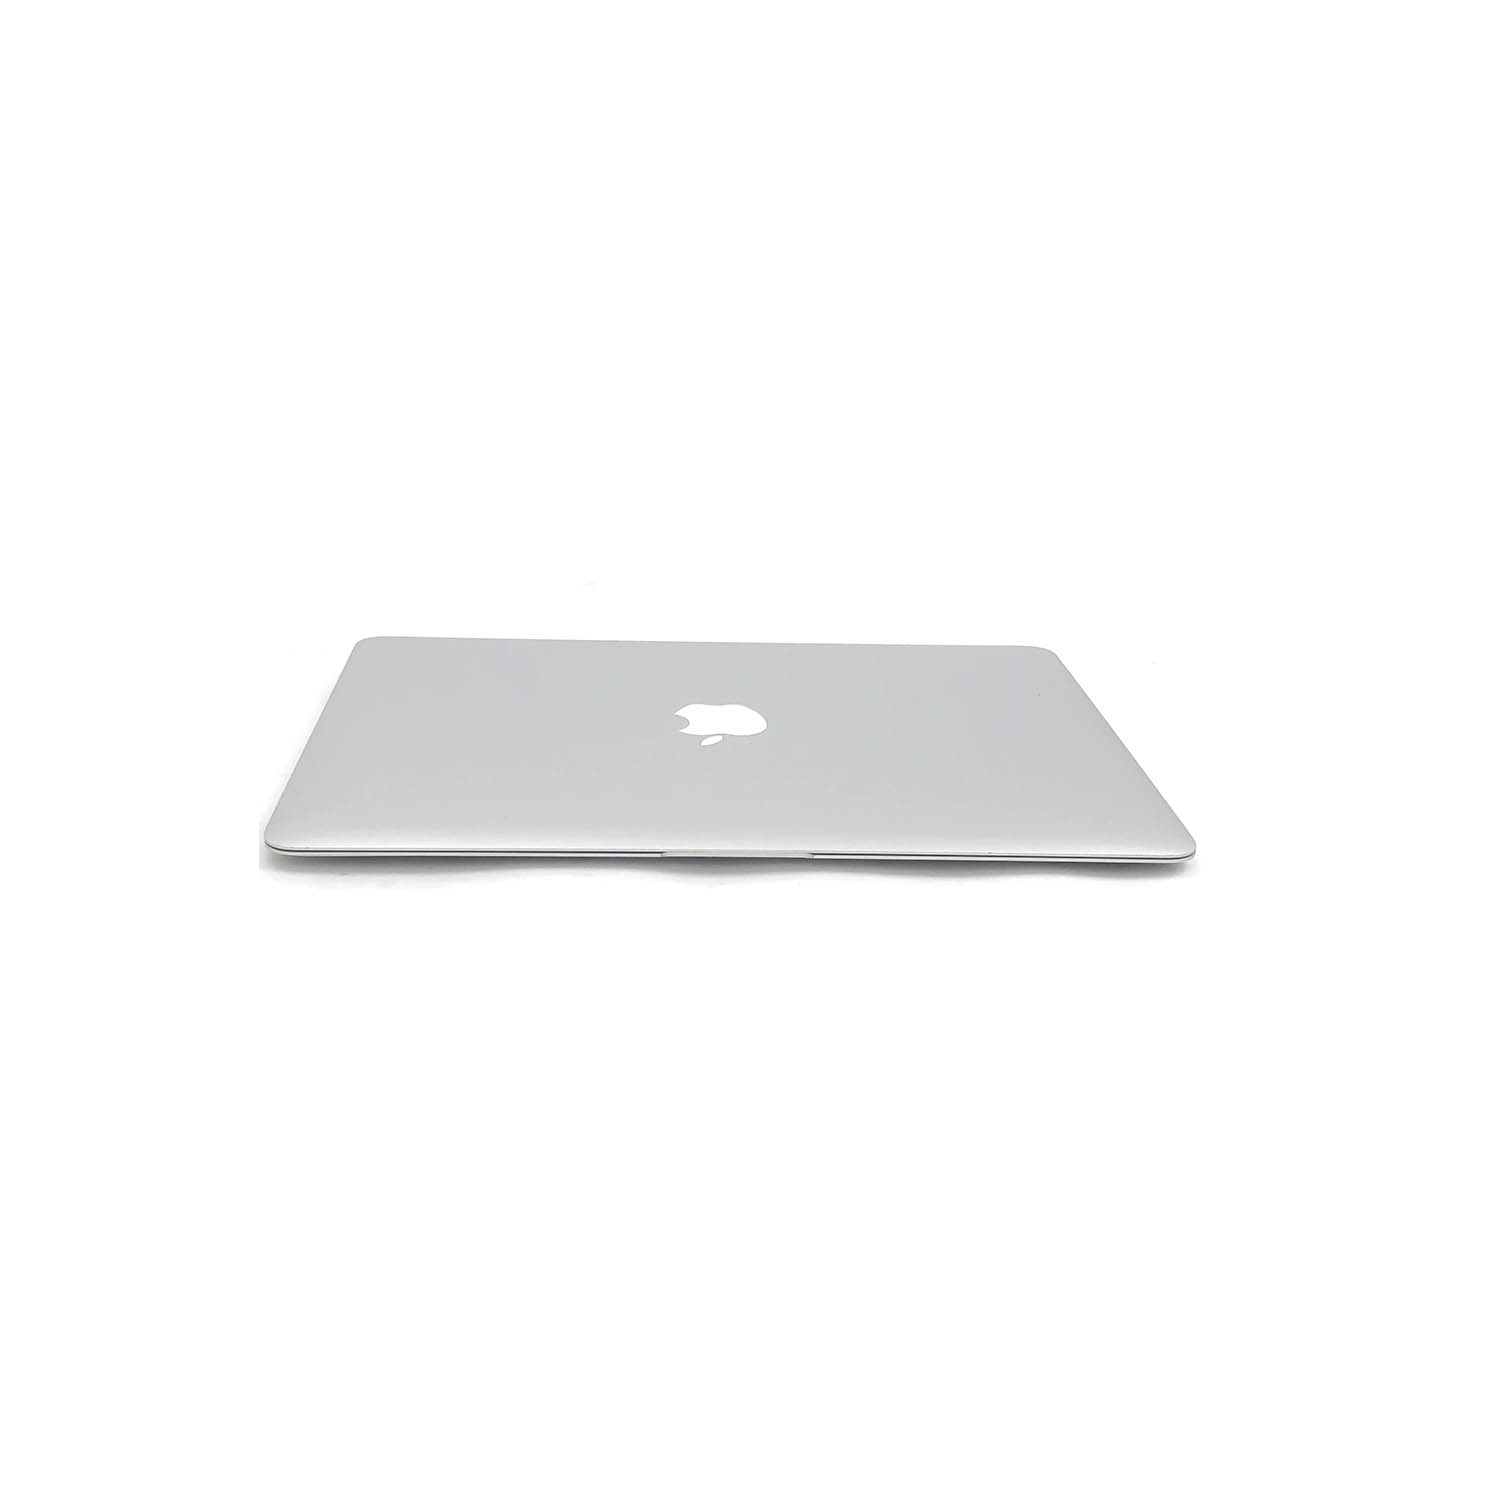 Macbook Air 13 i5 1.8Ghz 8GB 128gb SSD MQD32LL/A Seminovo